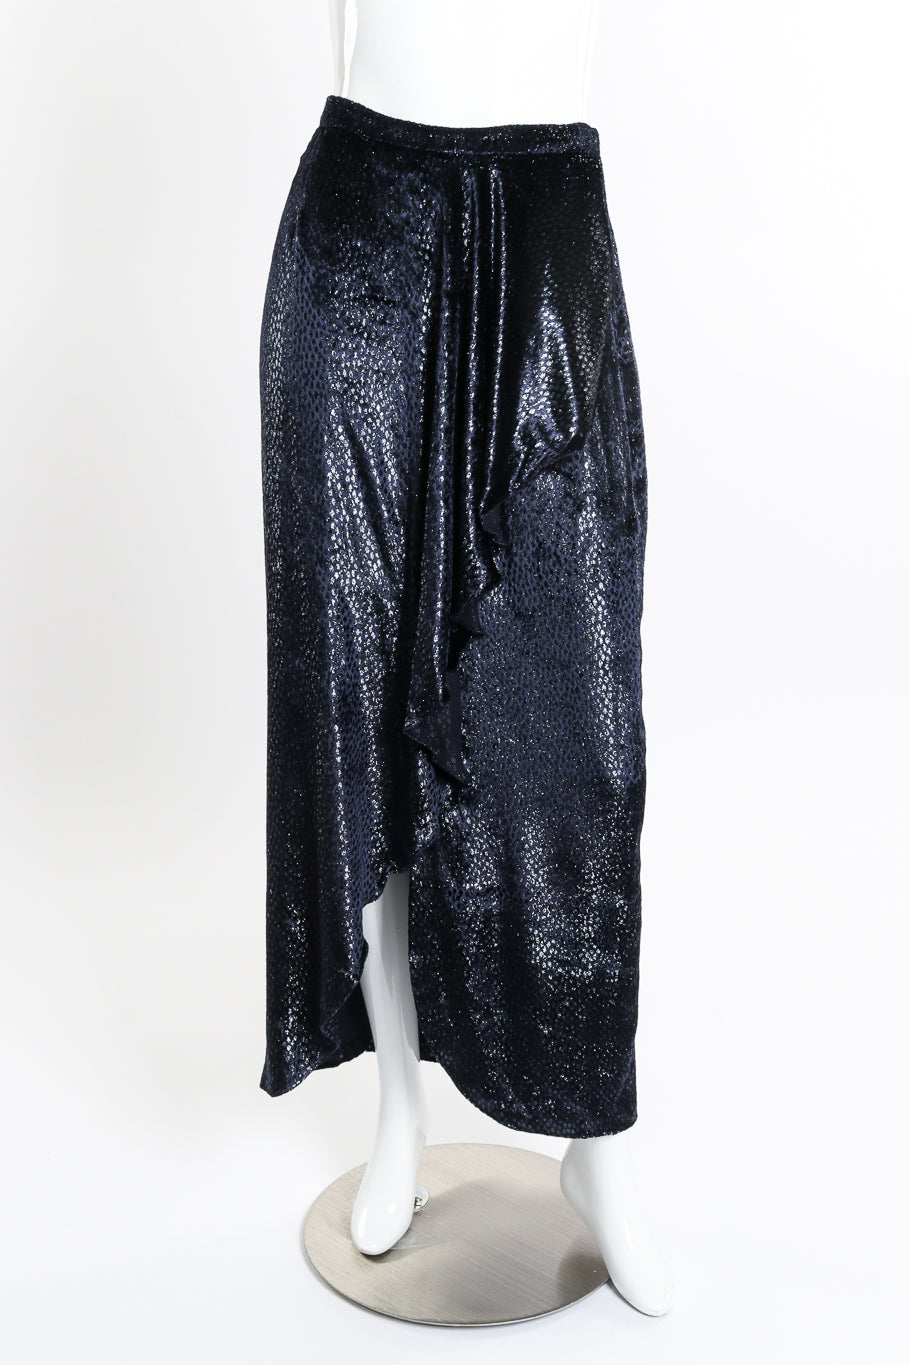 Vicky Tiel Metallic Silk Velvet Skirt front on mannequin @recessla